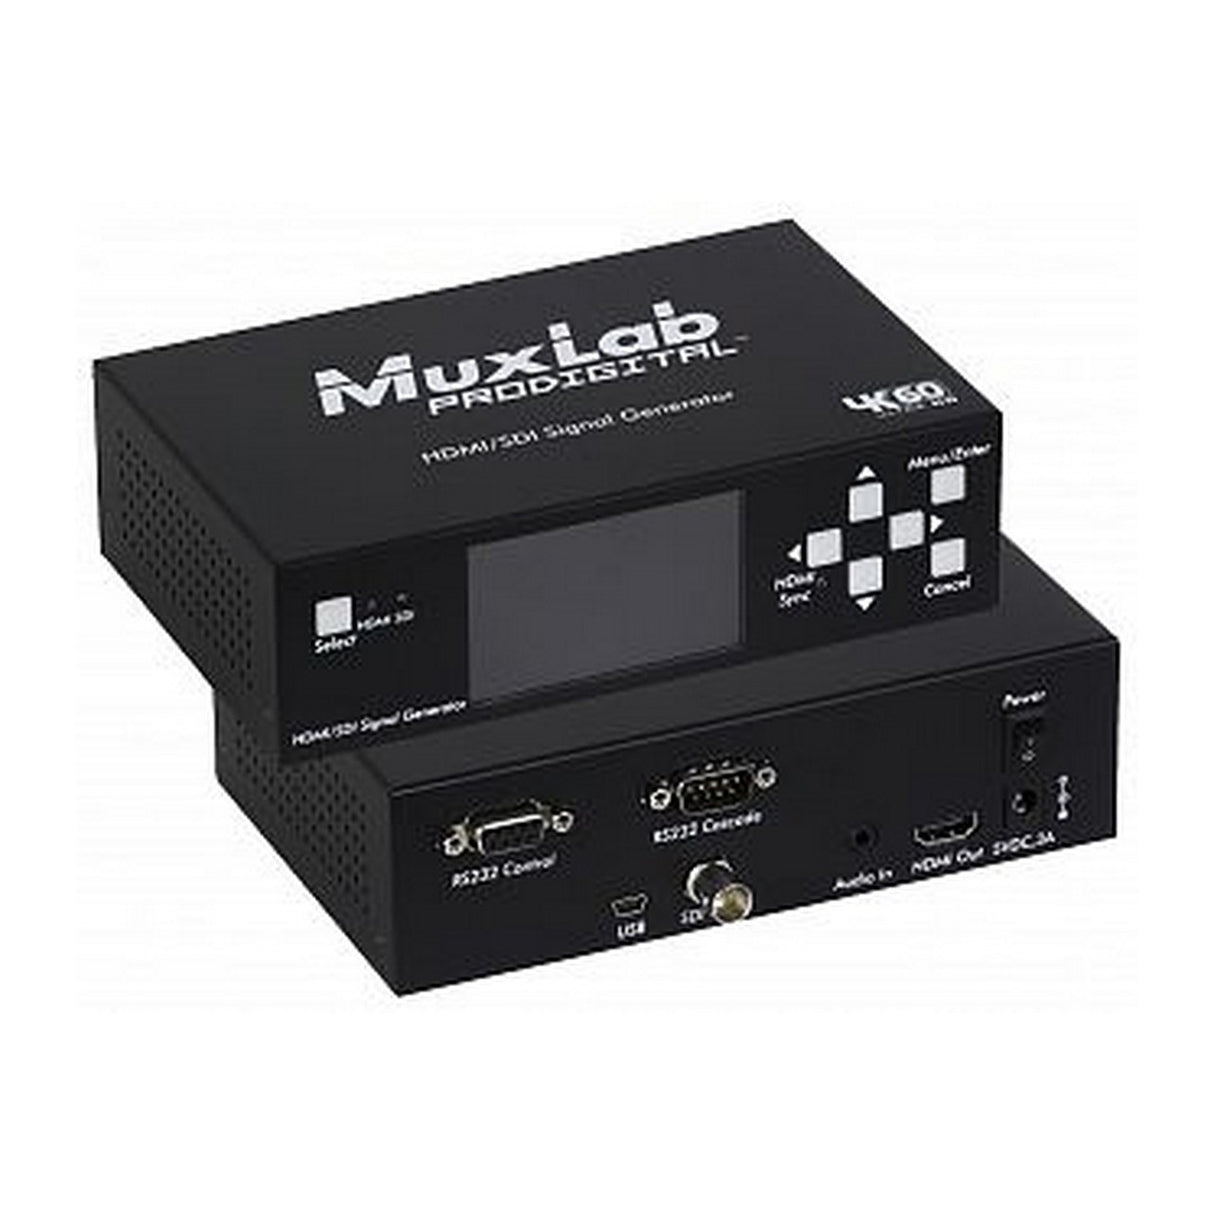 MuxLab 500830 | HDMI 2.0 3G-SDI Test Signal Generator